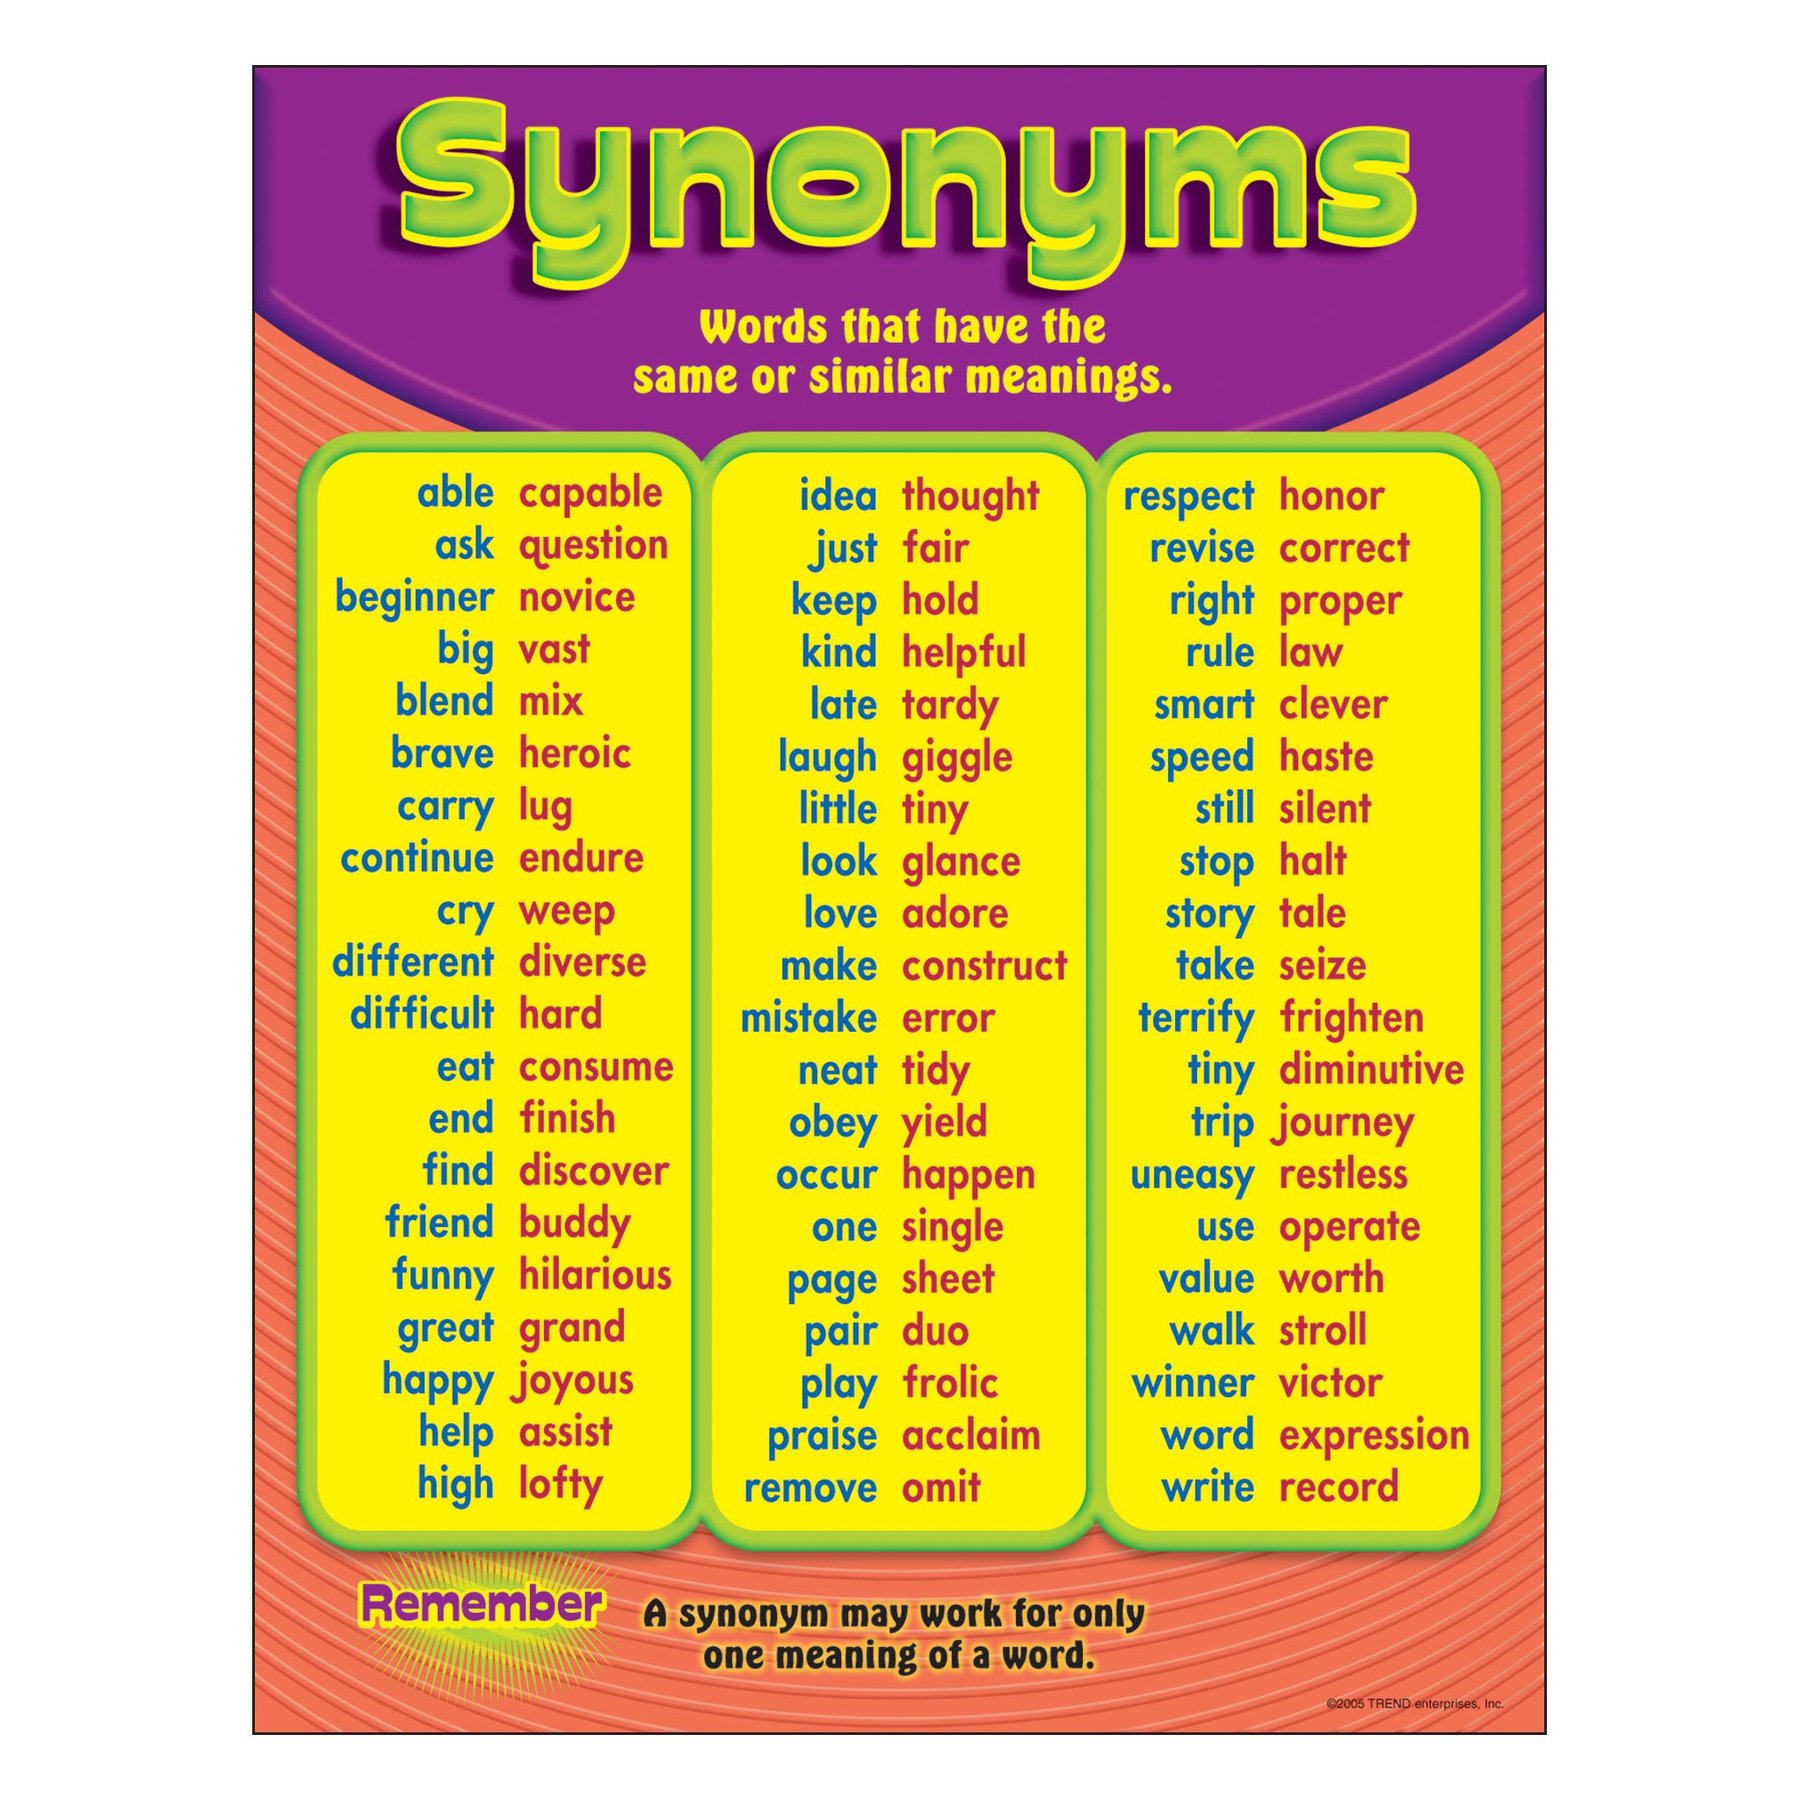 Synonyms Mistakes, Error, Blunder worksheet